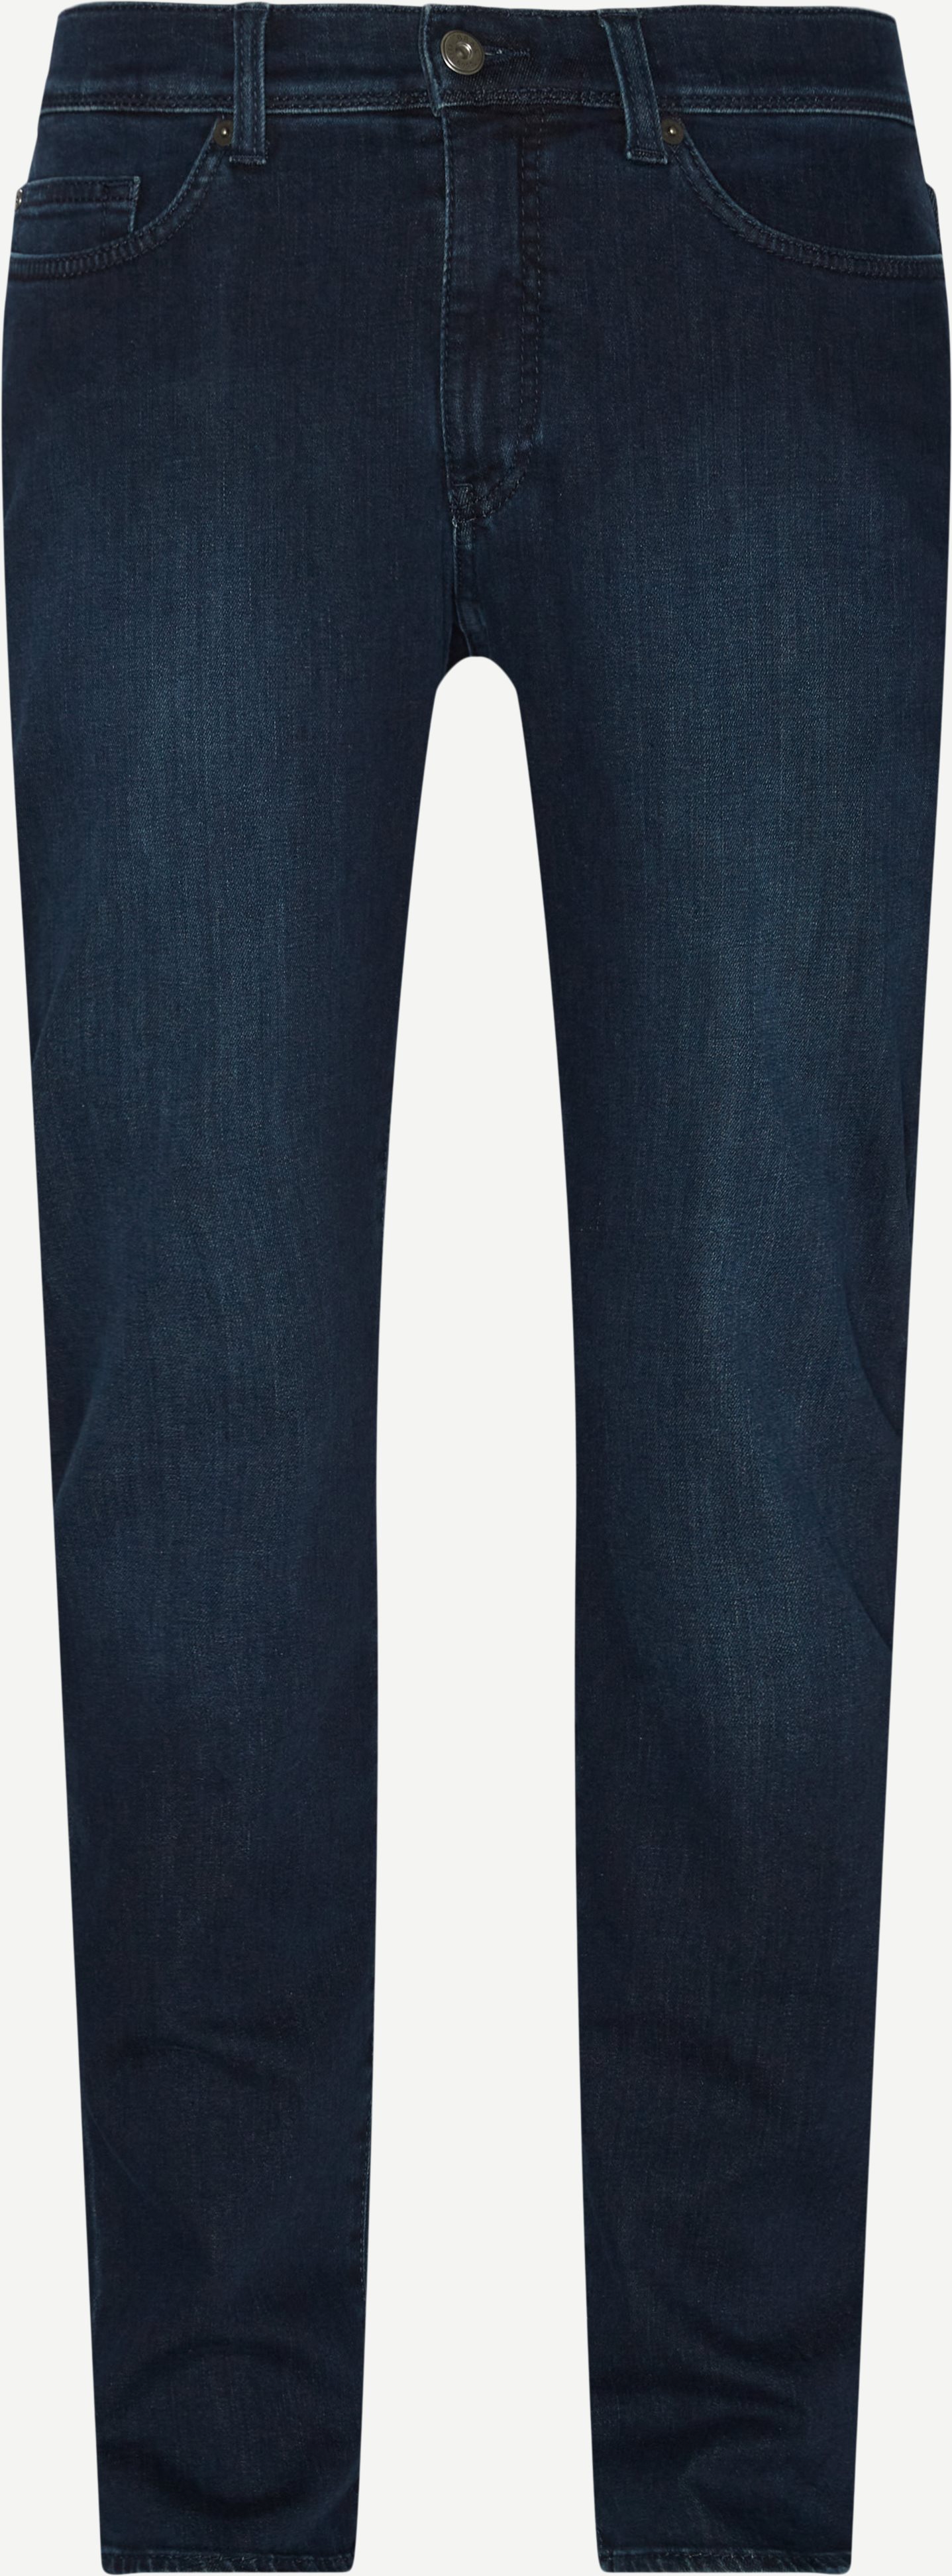 Cadiz jeans - Jeans - Straight fit - Denim